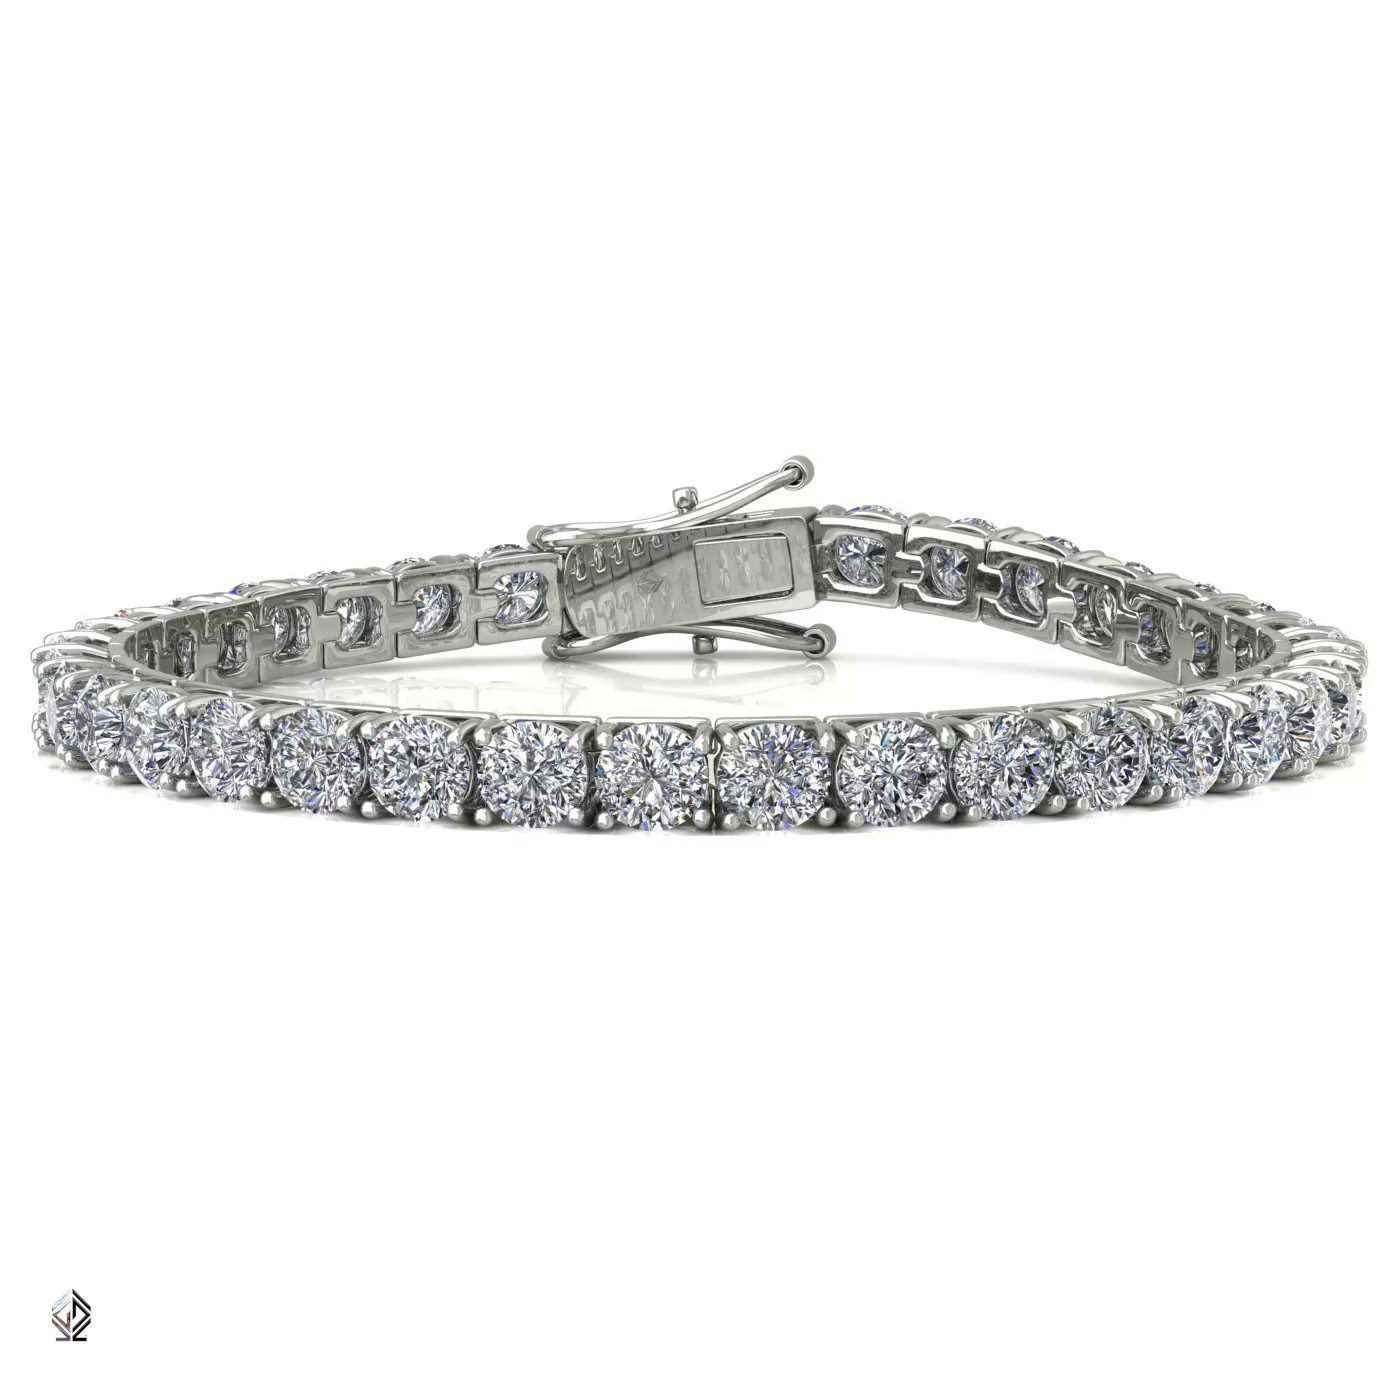 18k white gold 4.2mm 4 prong round shape diamond tennis bracelet in square setting